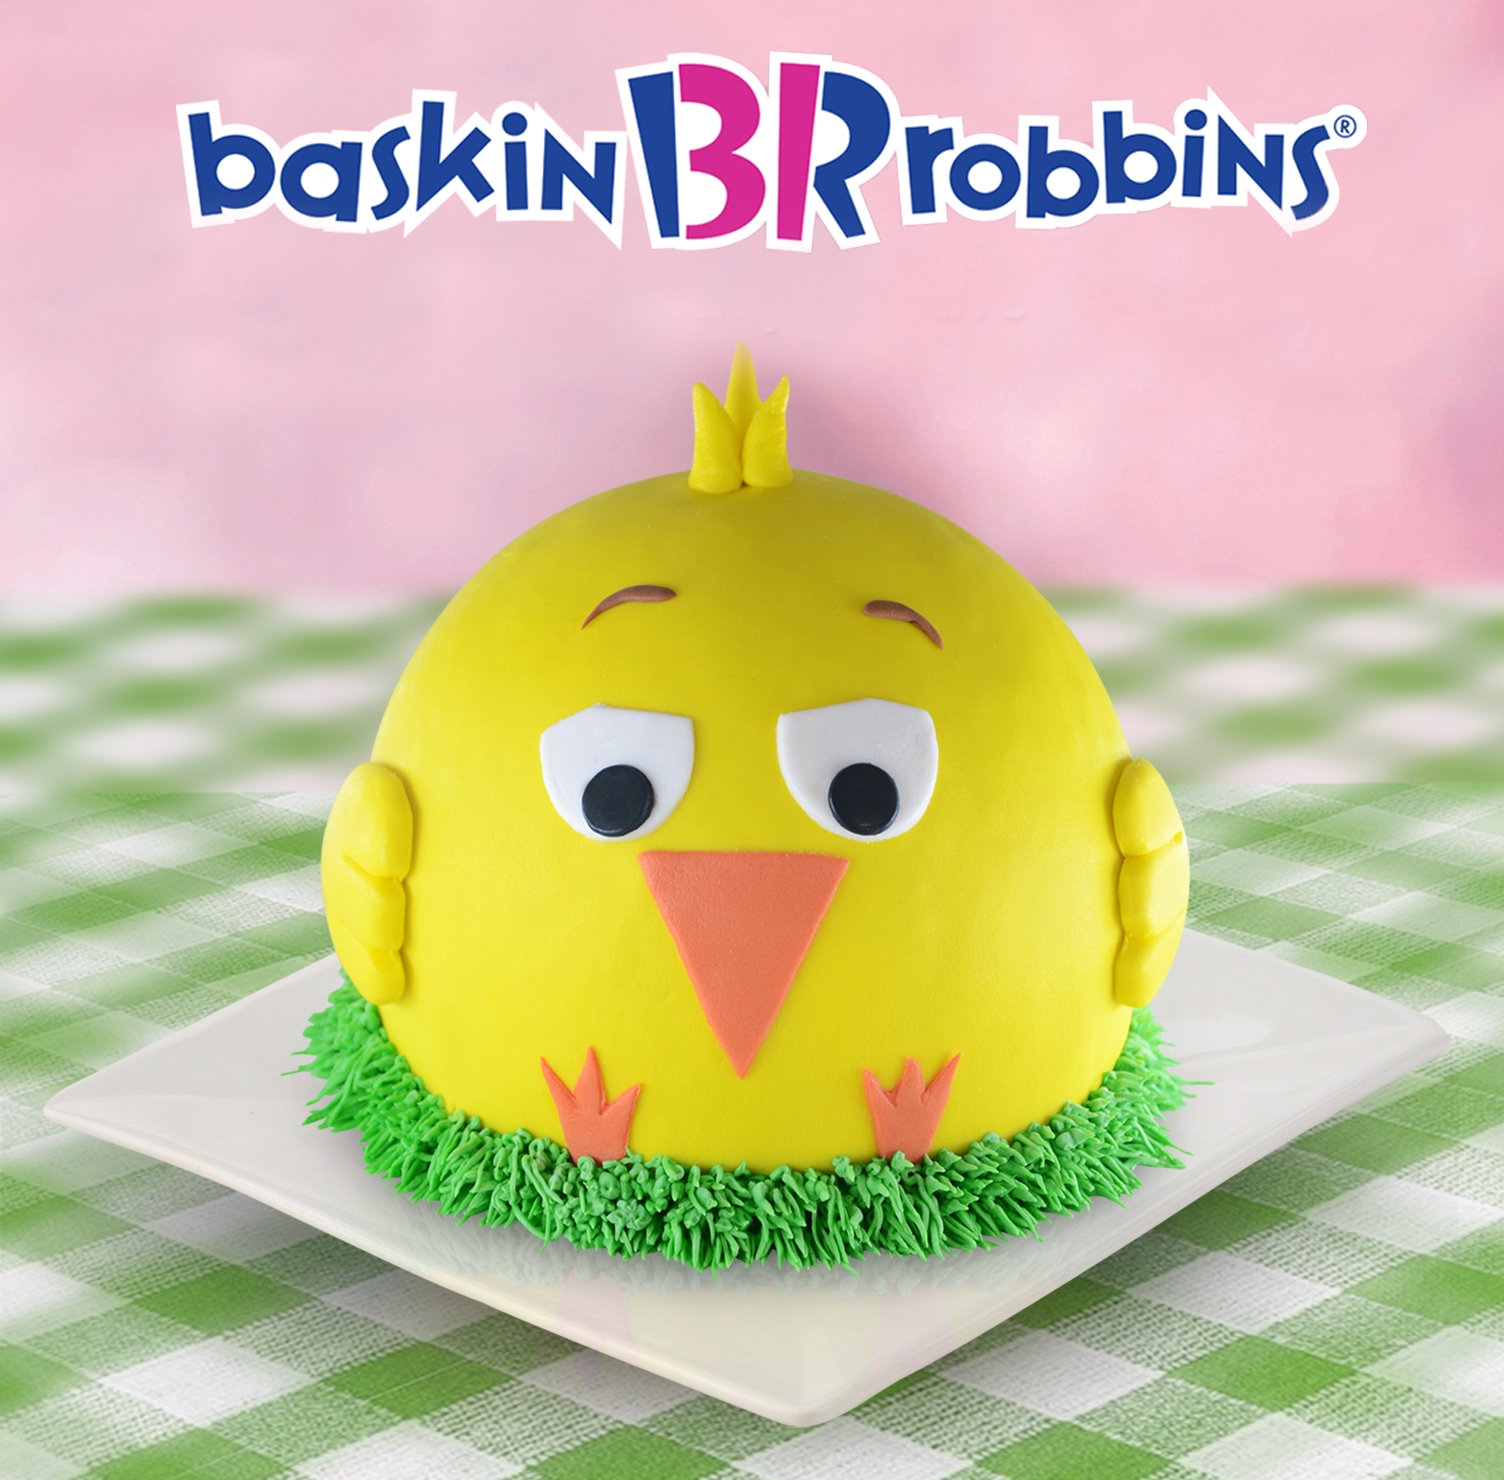 Baskin-Robbins Chick Cake